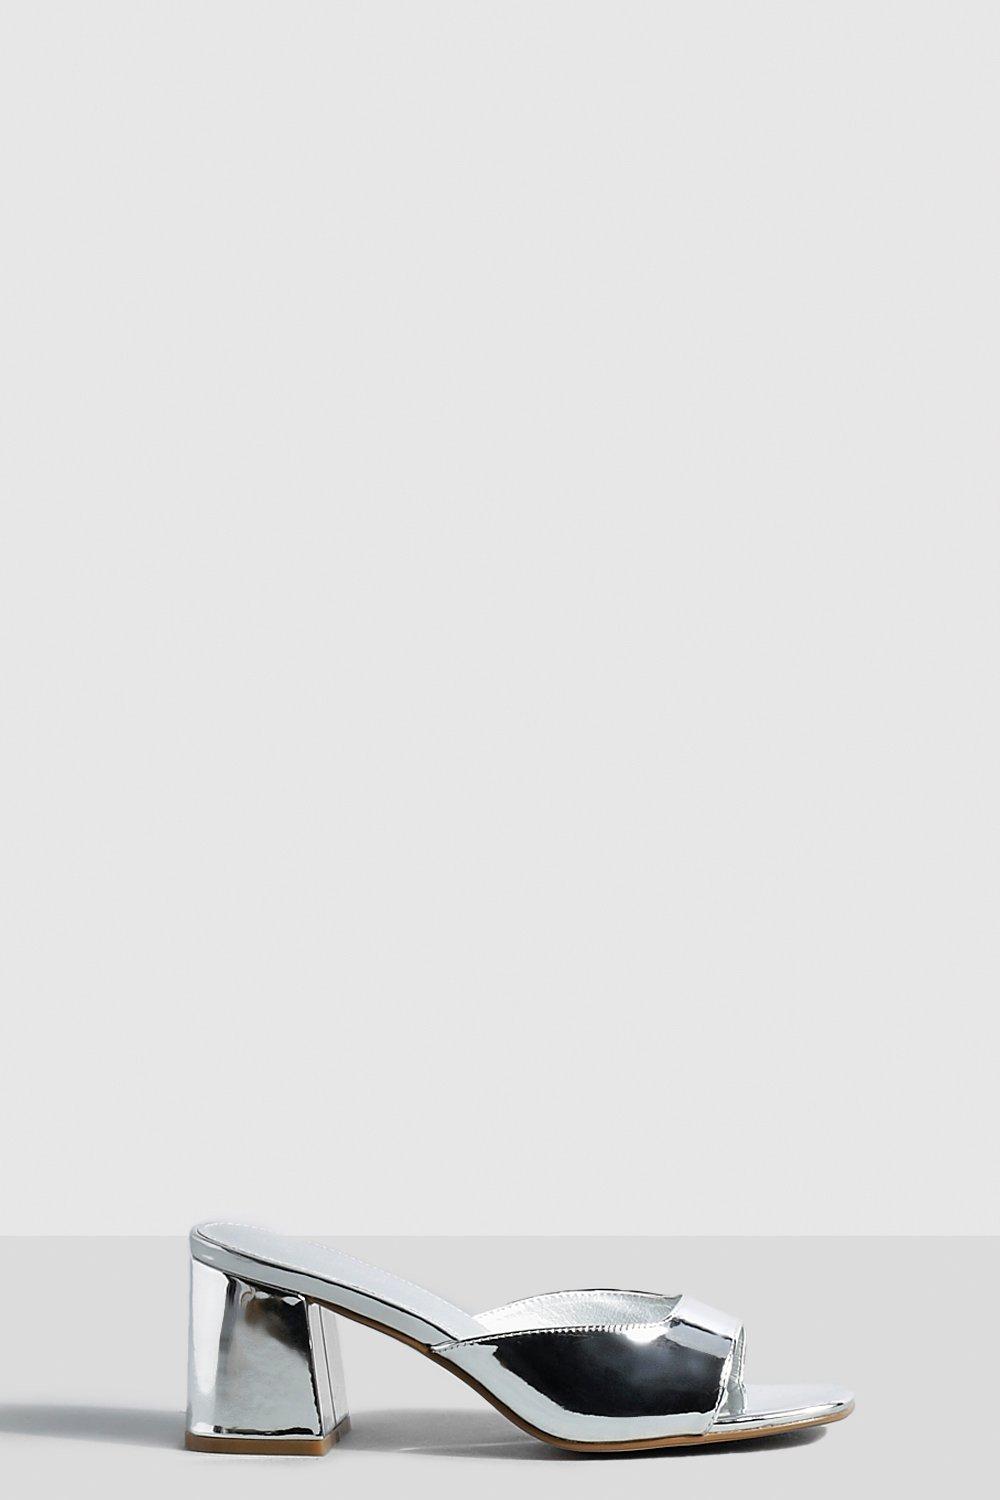 Silver Slipper Elle Size 7 Rhinestone Sparkle Slingback High Heel Shoes |  eBay